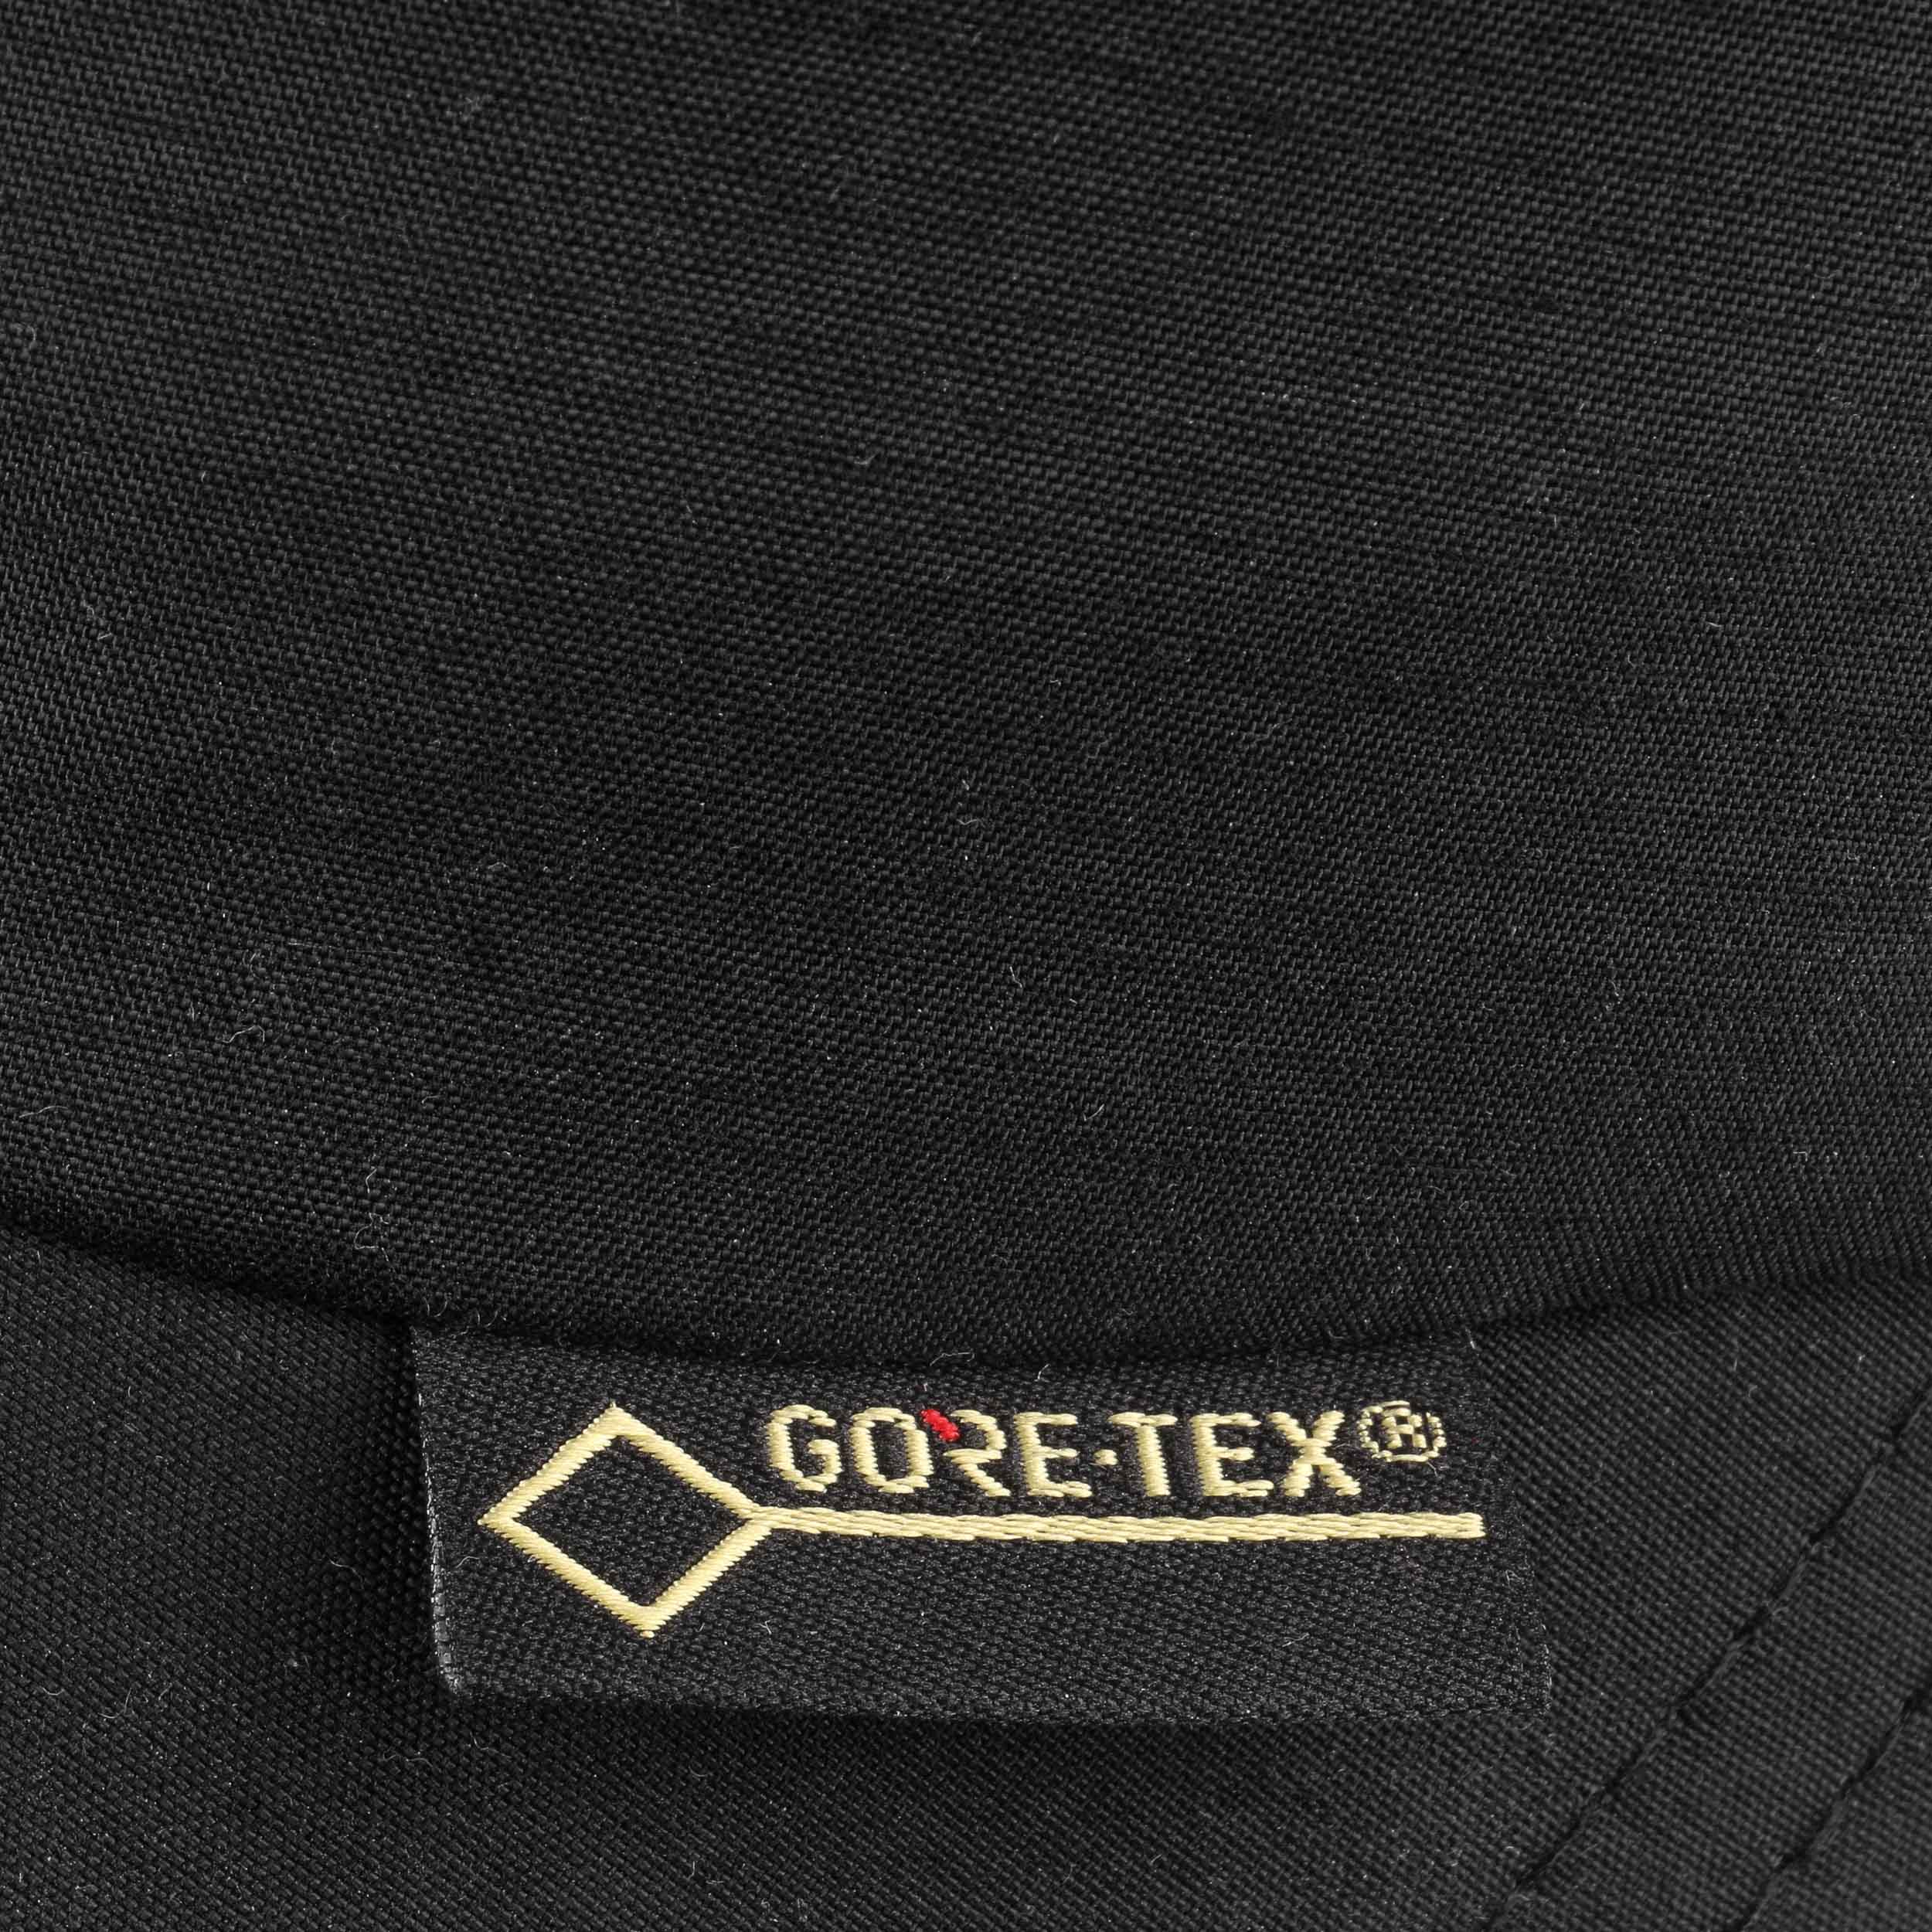 Gortex Logo - Steven Uni Gore-Tex Baseball Cap by Lierys, GBP 54,95 --> Hats, caps ...